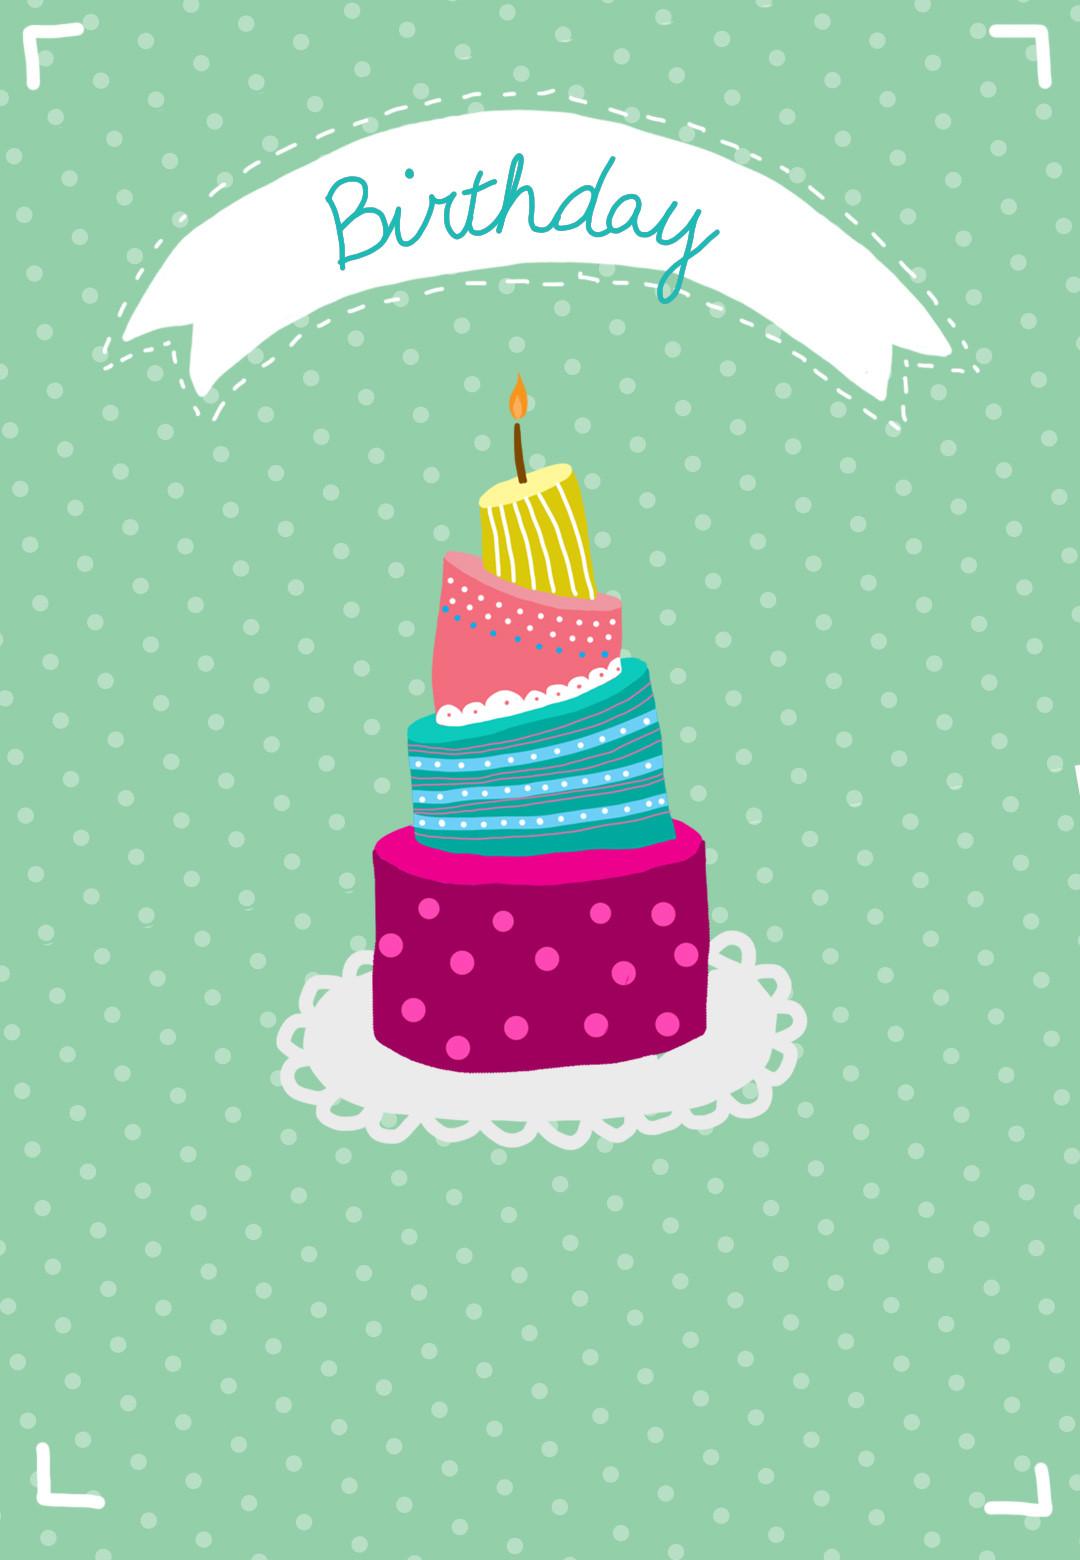 Make Birthday Cards Online Free
 Four Tier Cake Birthday Card